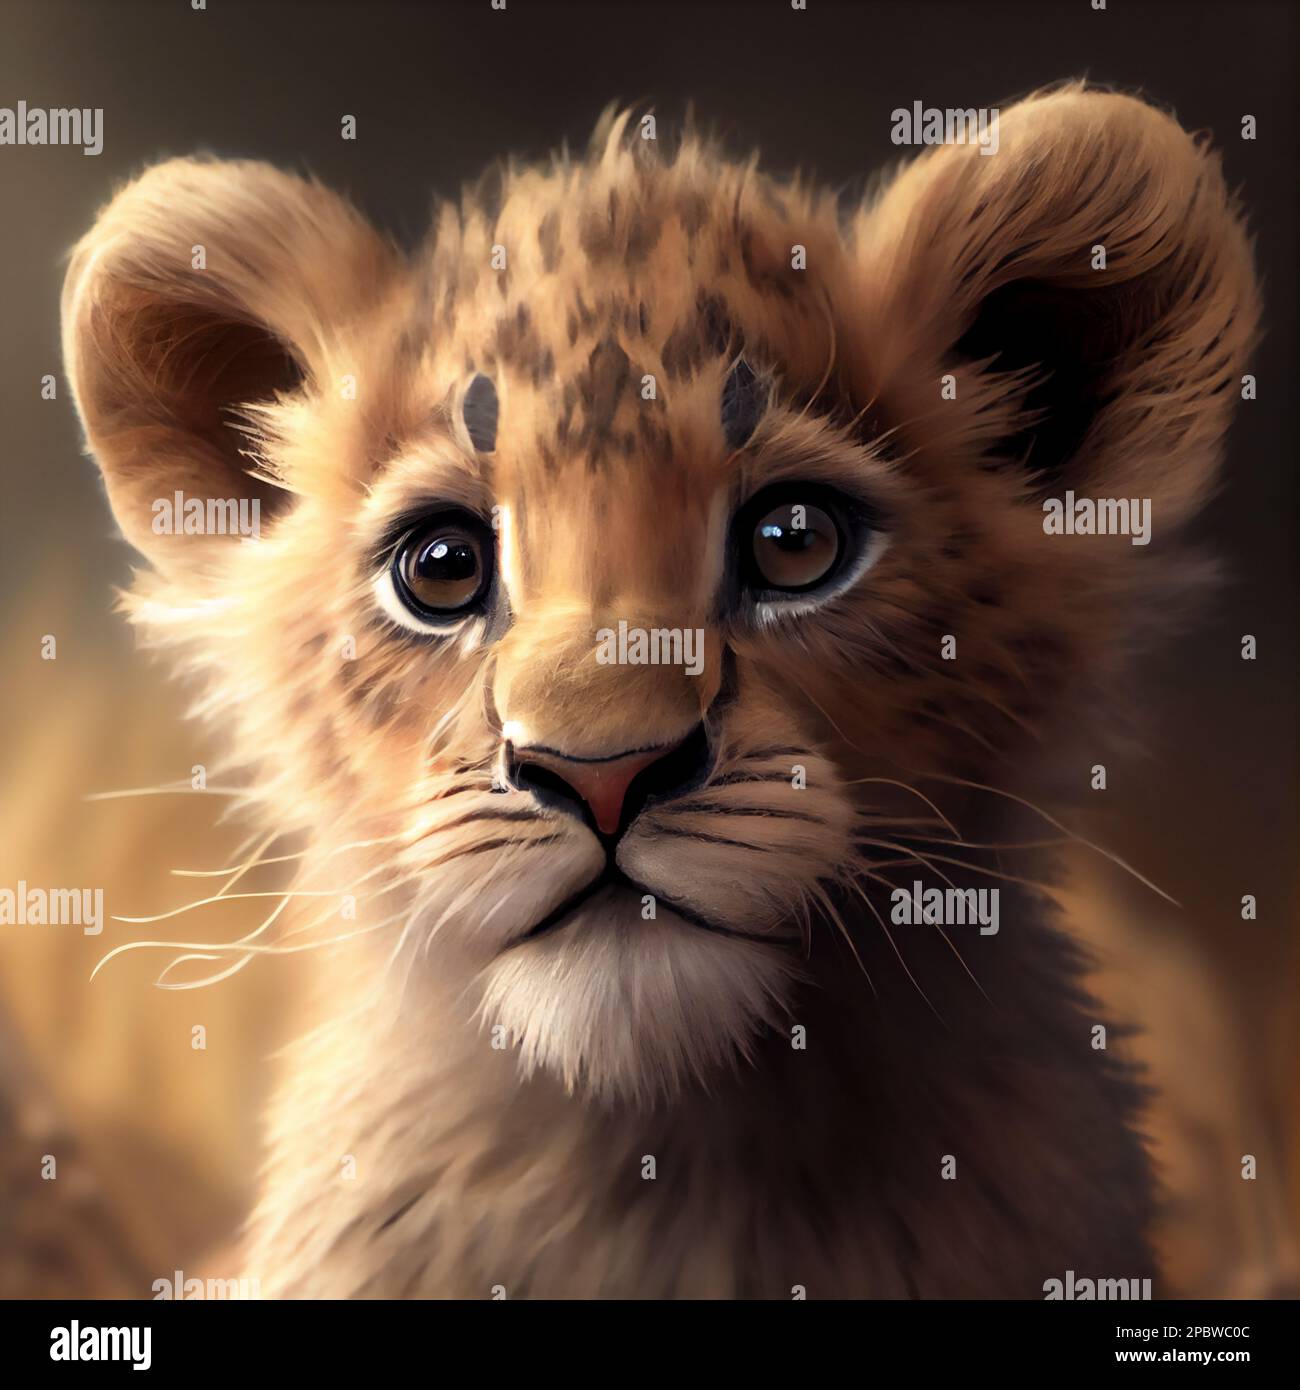 Lion cub cute animal 1125x2436 iPhone 11 ProXSX wallpaper background  picture image